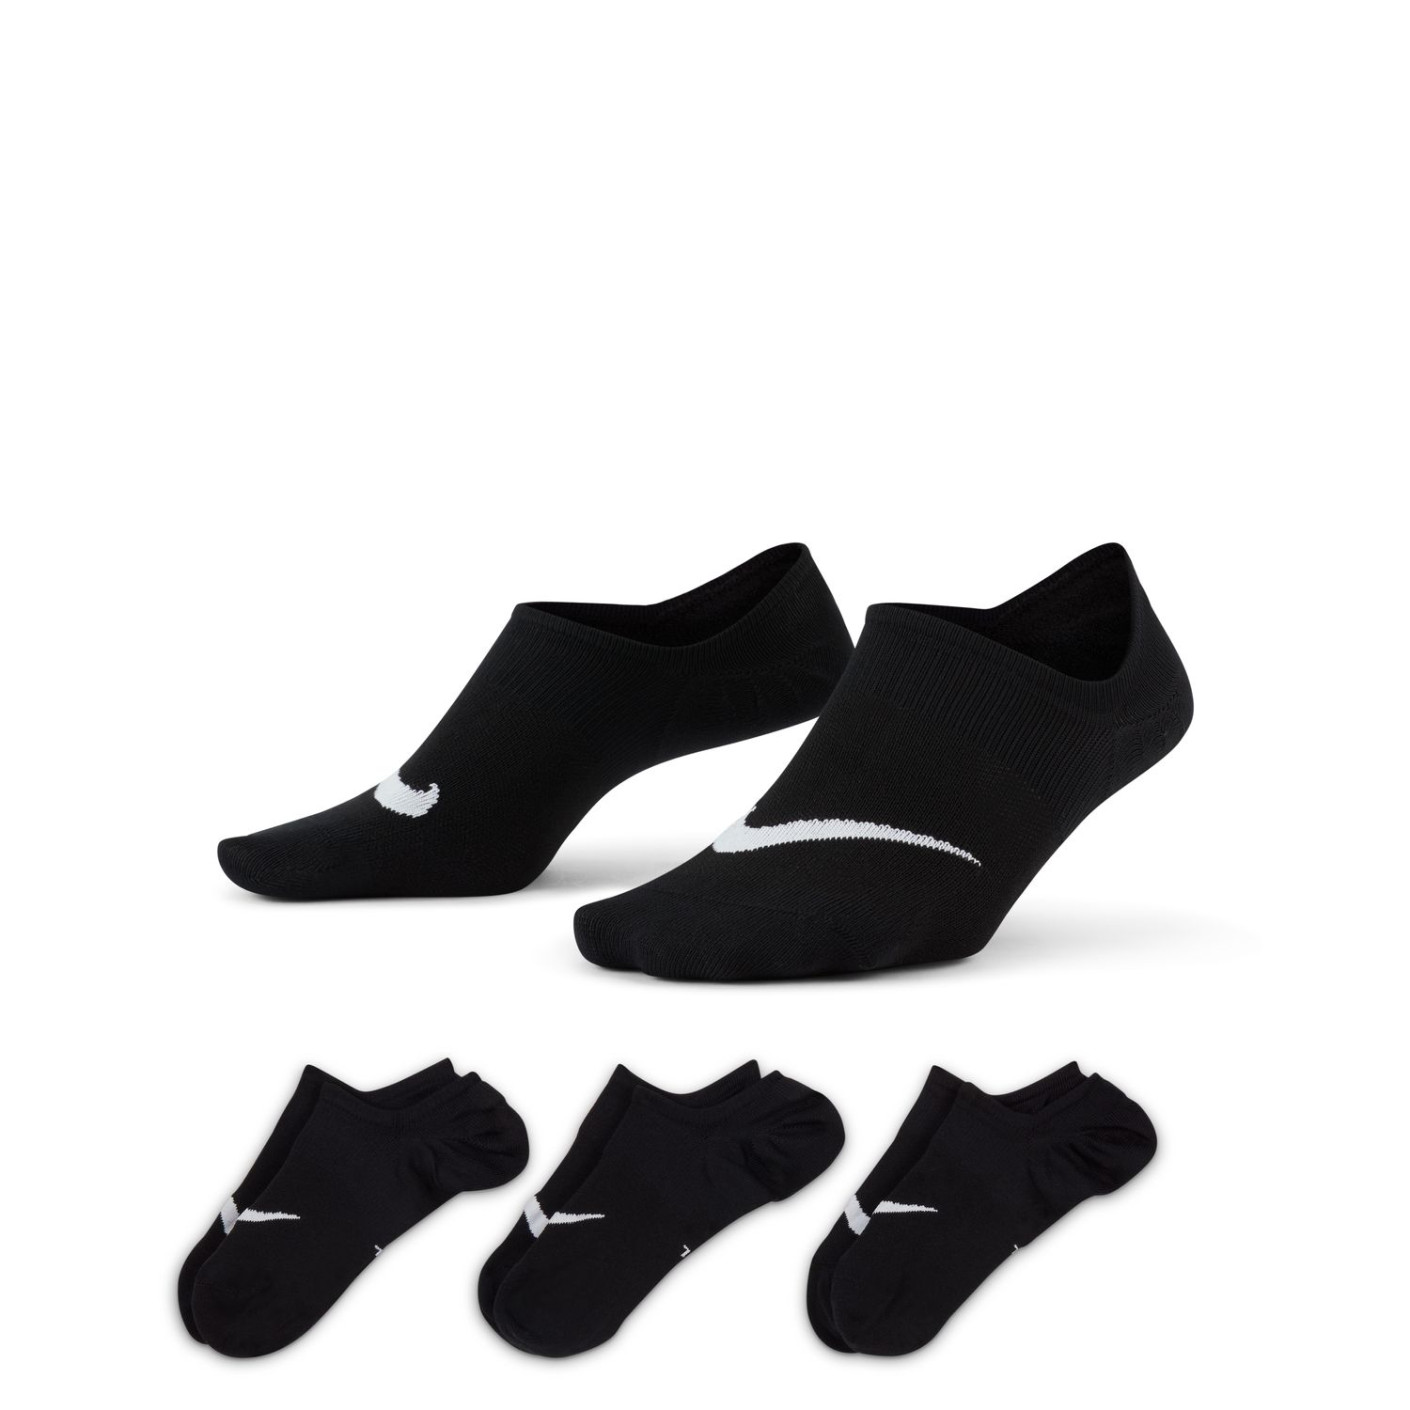 Nike Everyday Plus Lightweight Enkelsokken 3-Pack Dames Zwart Wit